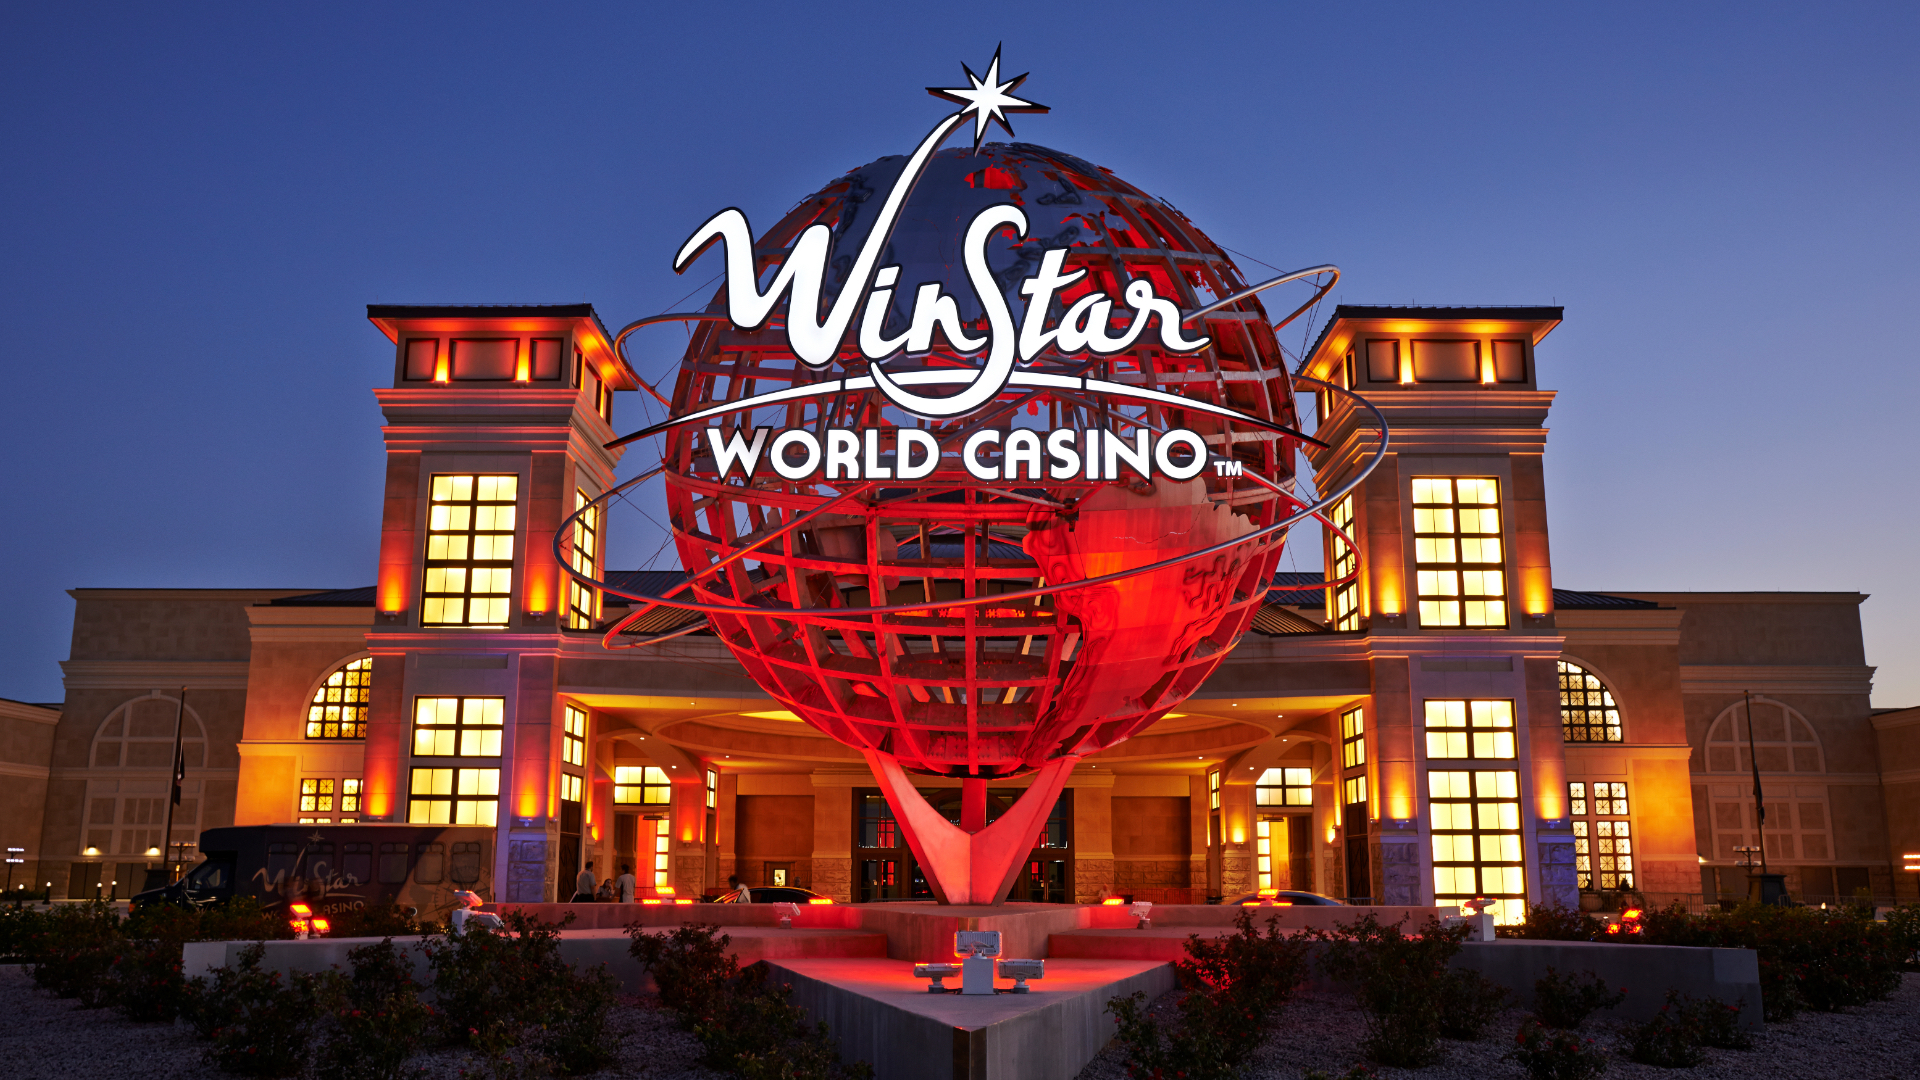 Winstar casino oklahoma